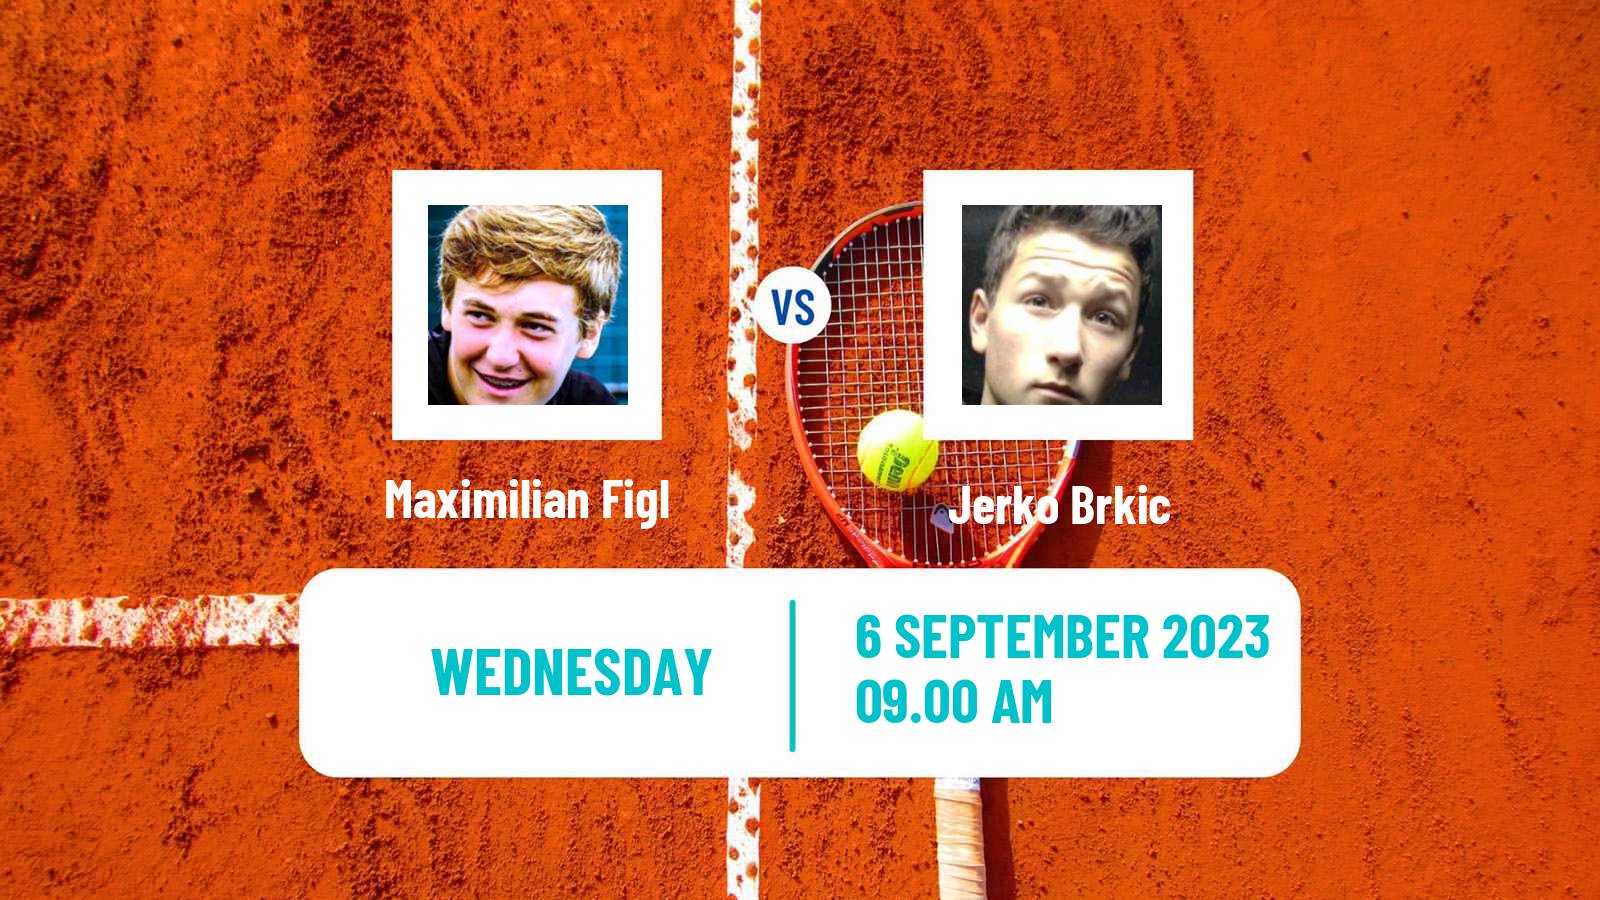 Tennis ITF M25 MarIBOr 3 Men 2023 Maximilian Figl - Jerko Brkic